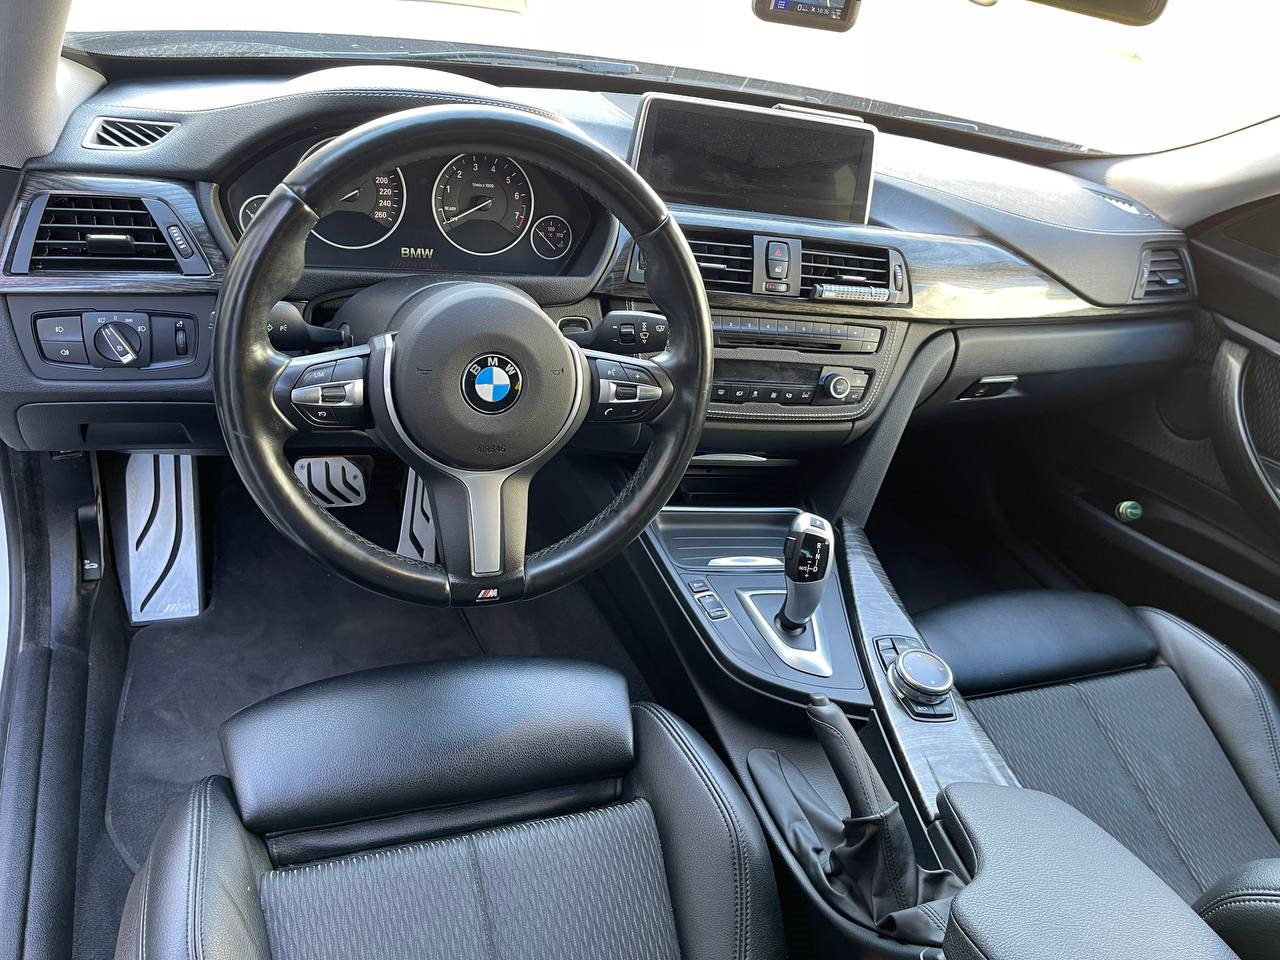 30 августа 2018. Руль BMW g30 2018 год. БМВ g30 салон. 3 Gran Turismo f34 салон кожа. БМВ ж30 2018.